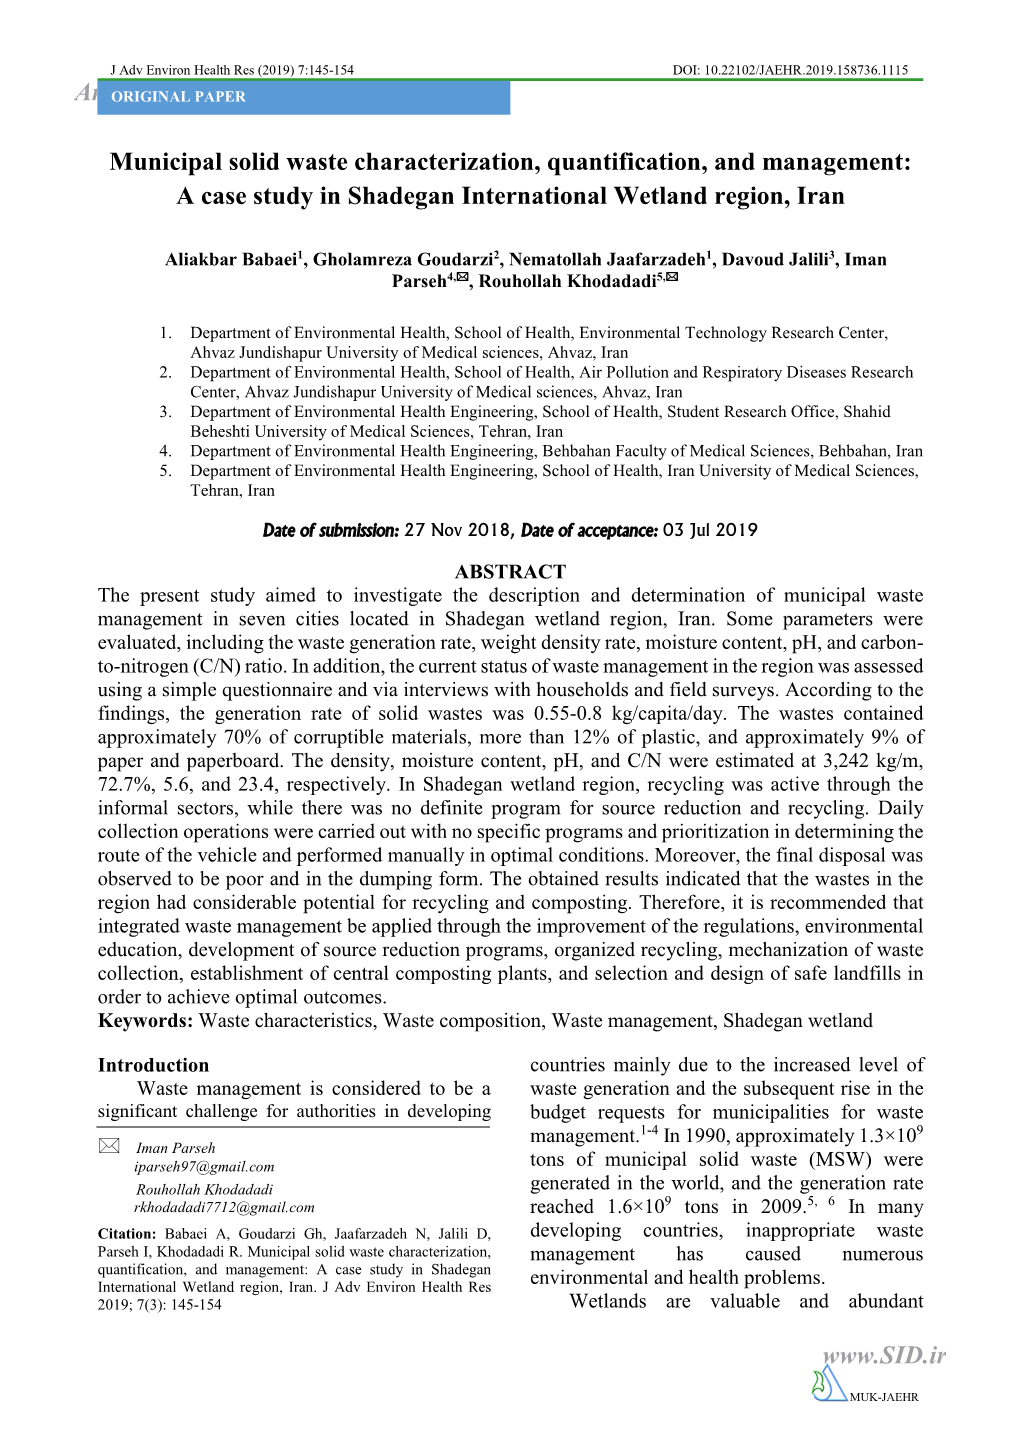 Municipal Solid Waste Characterization, Quantification, and Management: a Case Study in Shadegan International Wetland Region, Iran